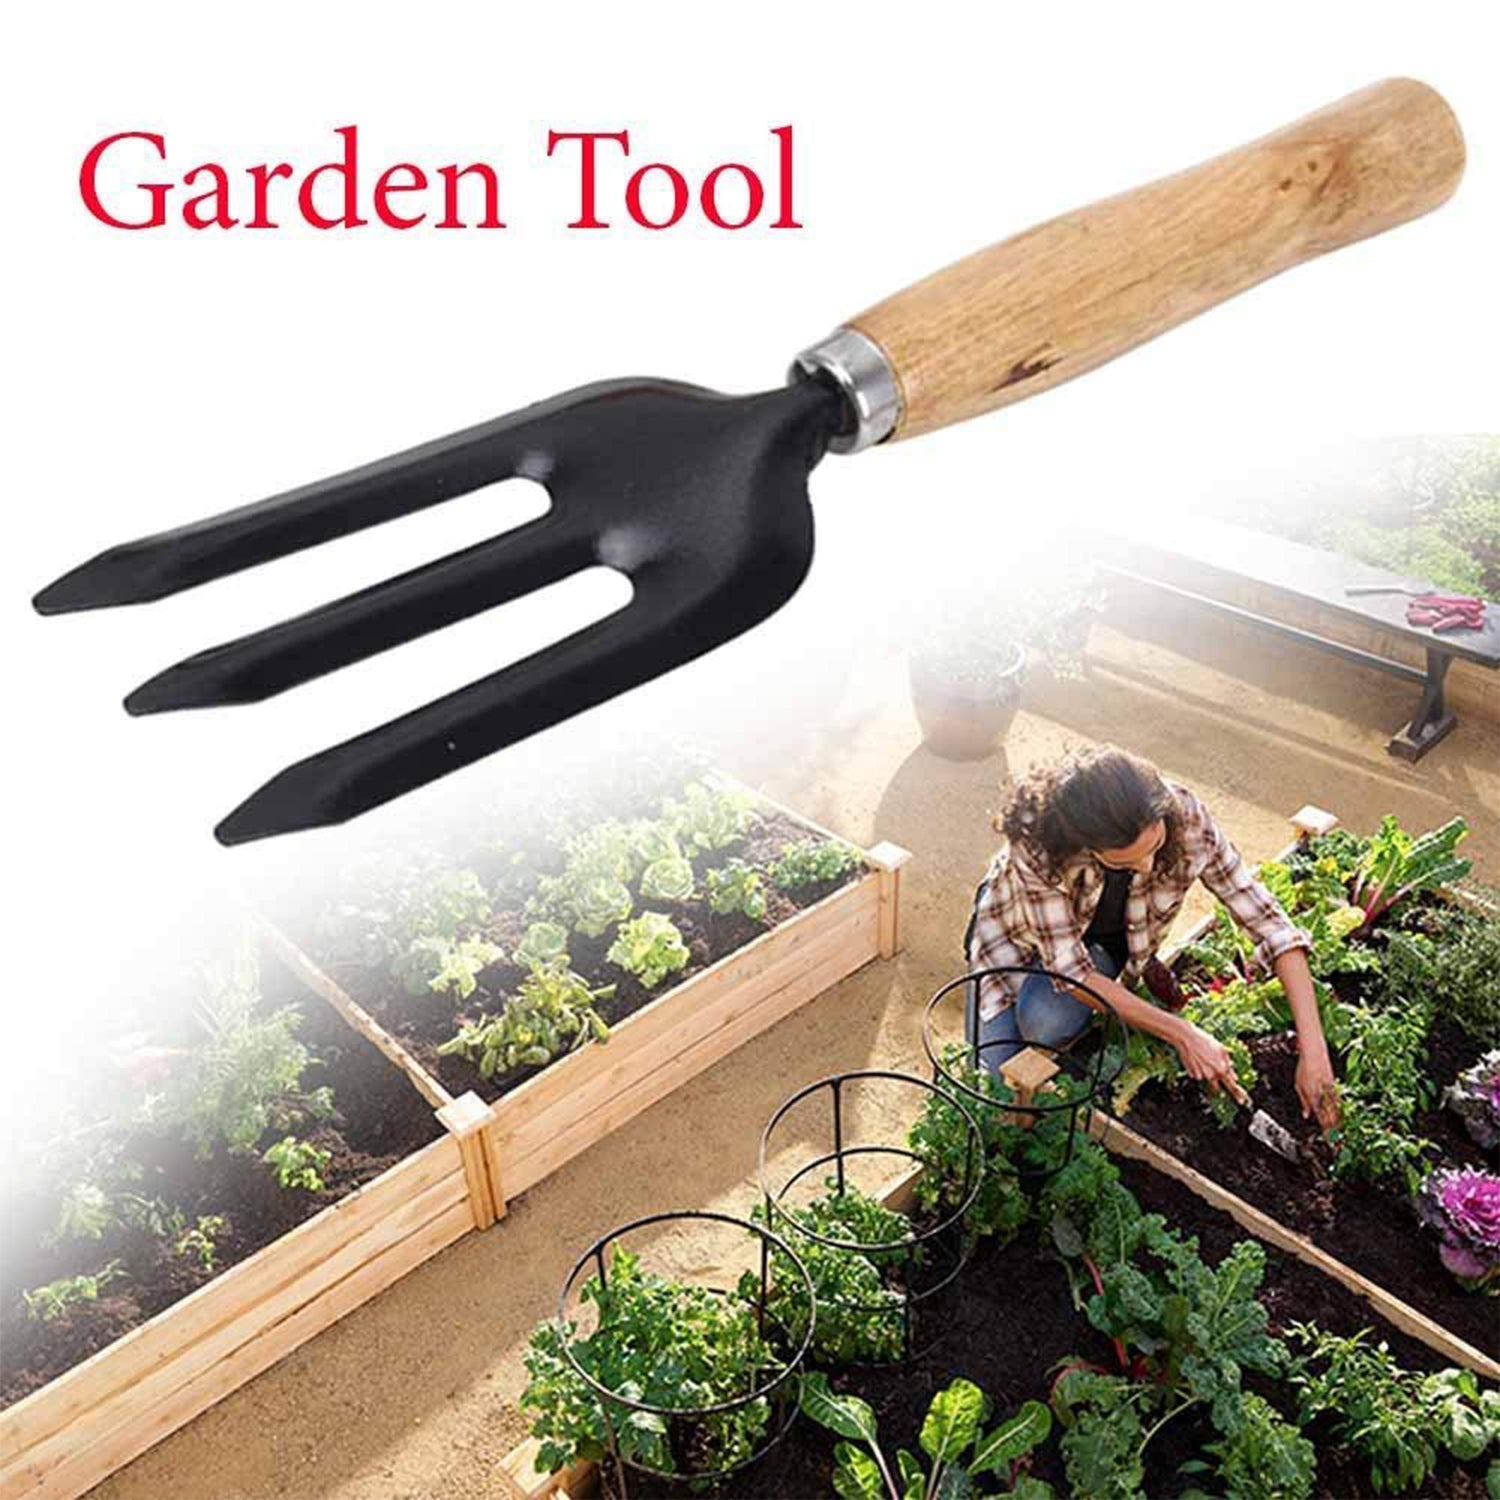 0542A 3pc Small Gardening Tools for Home Garden (Hand Cultivator, Small Trowel, Garden Fork) DeoDap